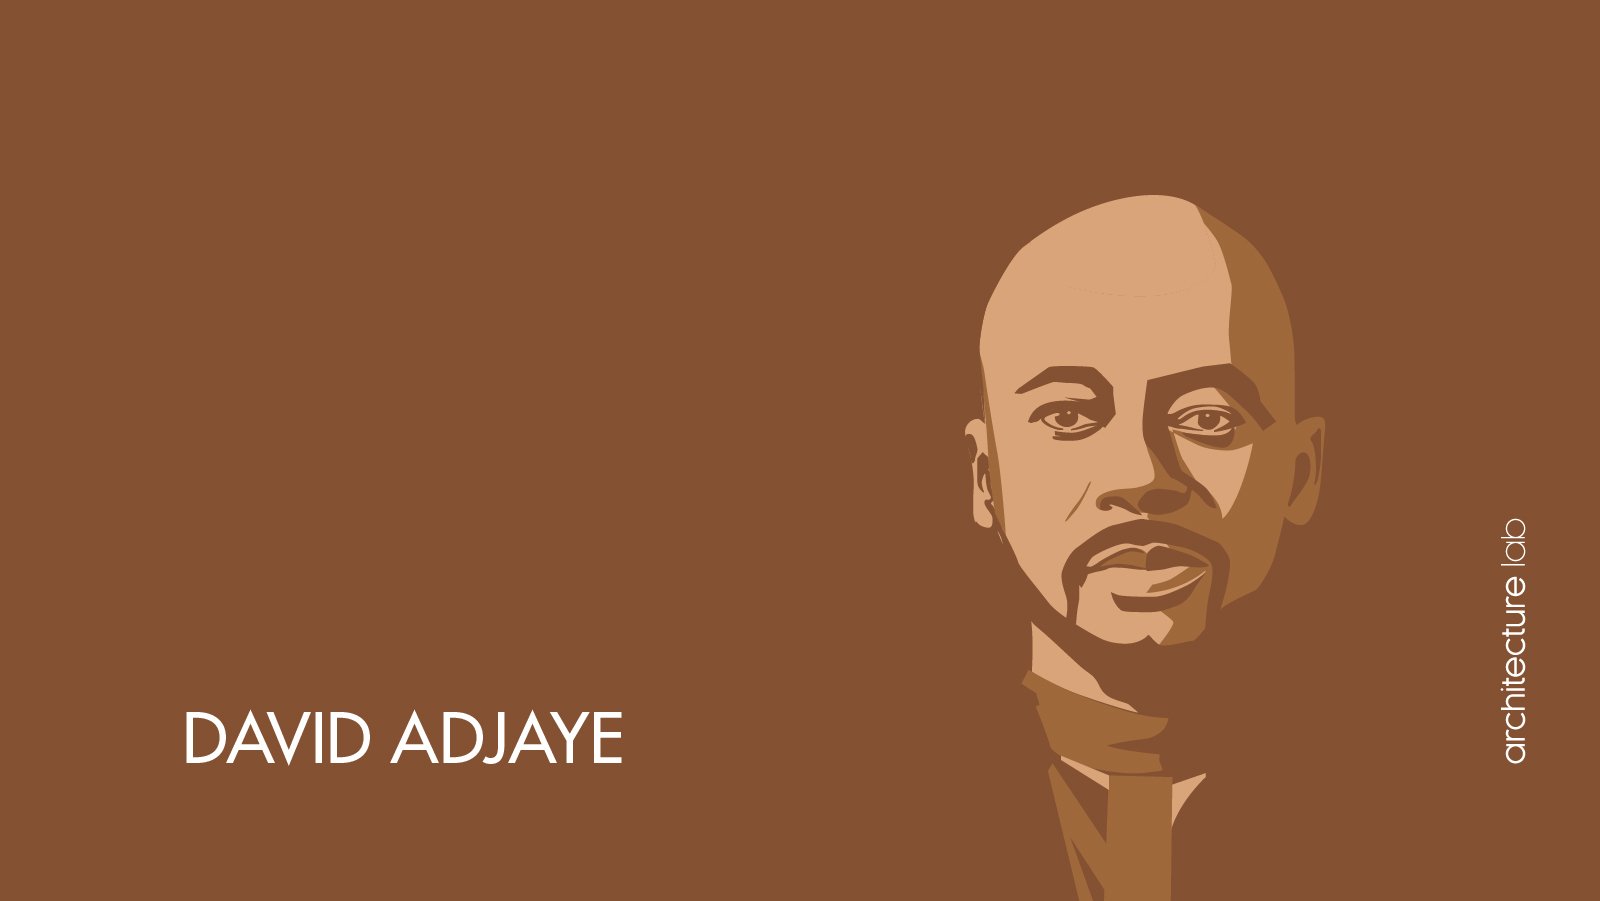 10. David adjaye